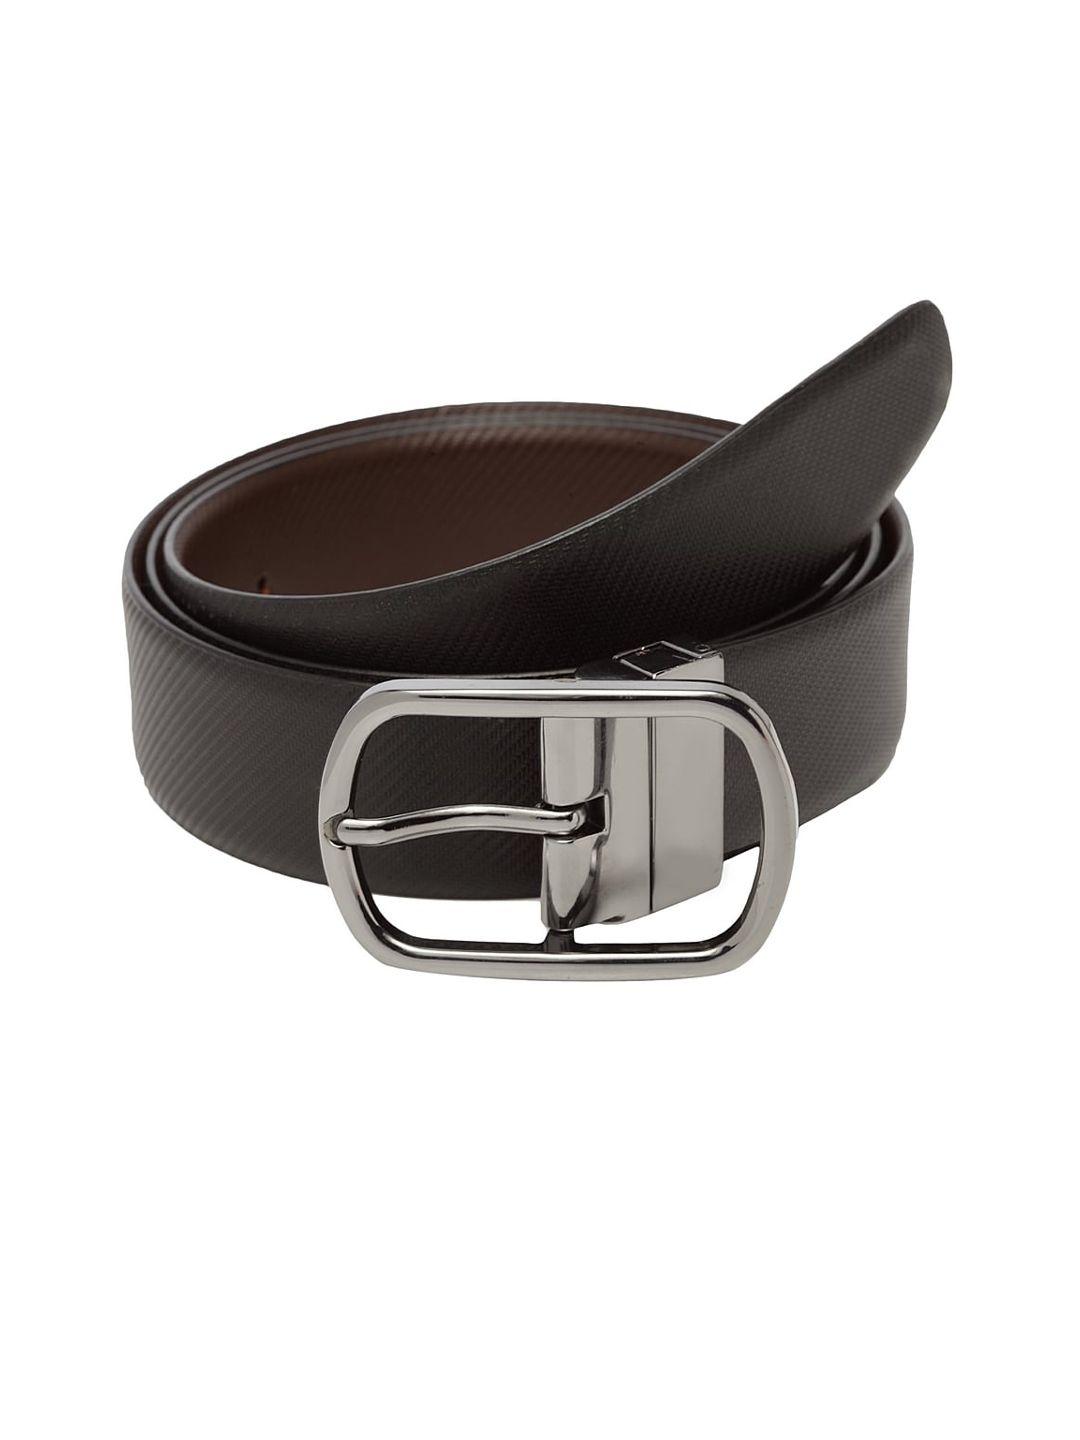 welbawt men brown & black textured leather slim reversible belt